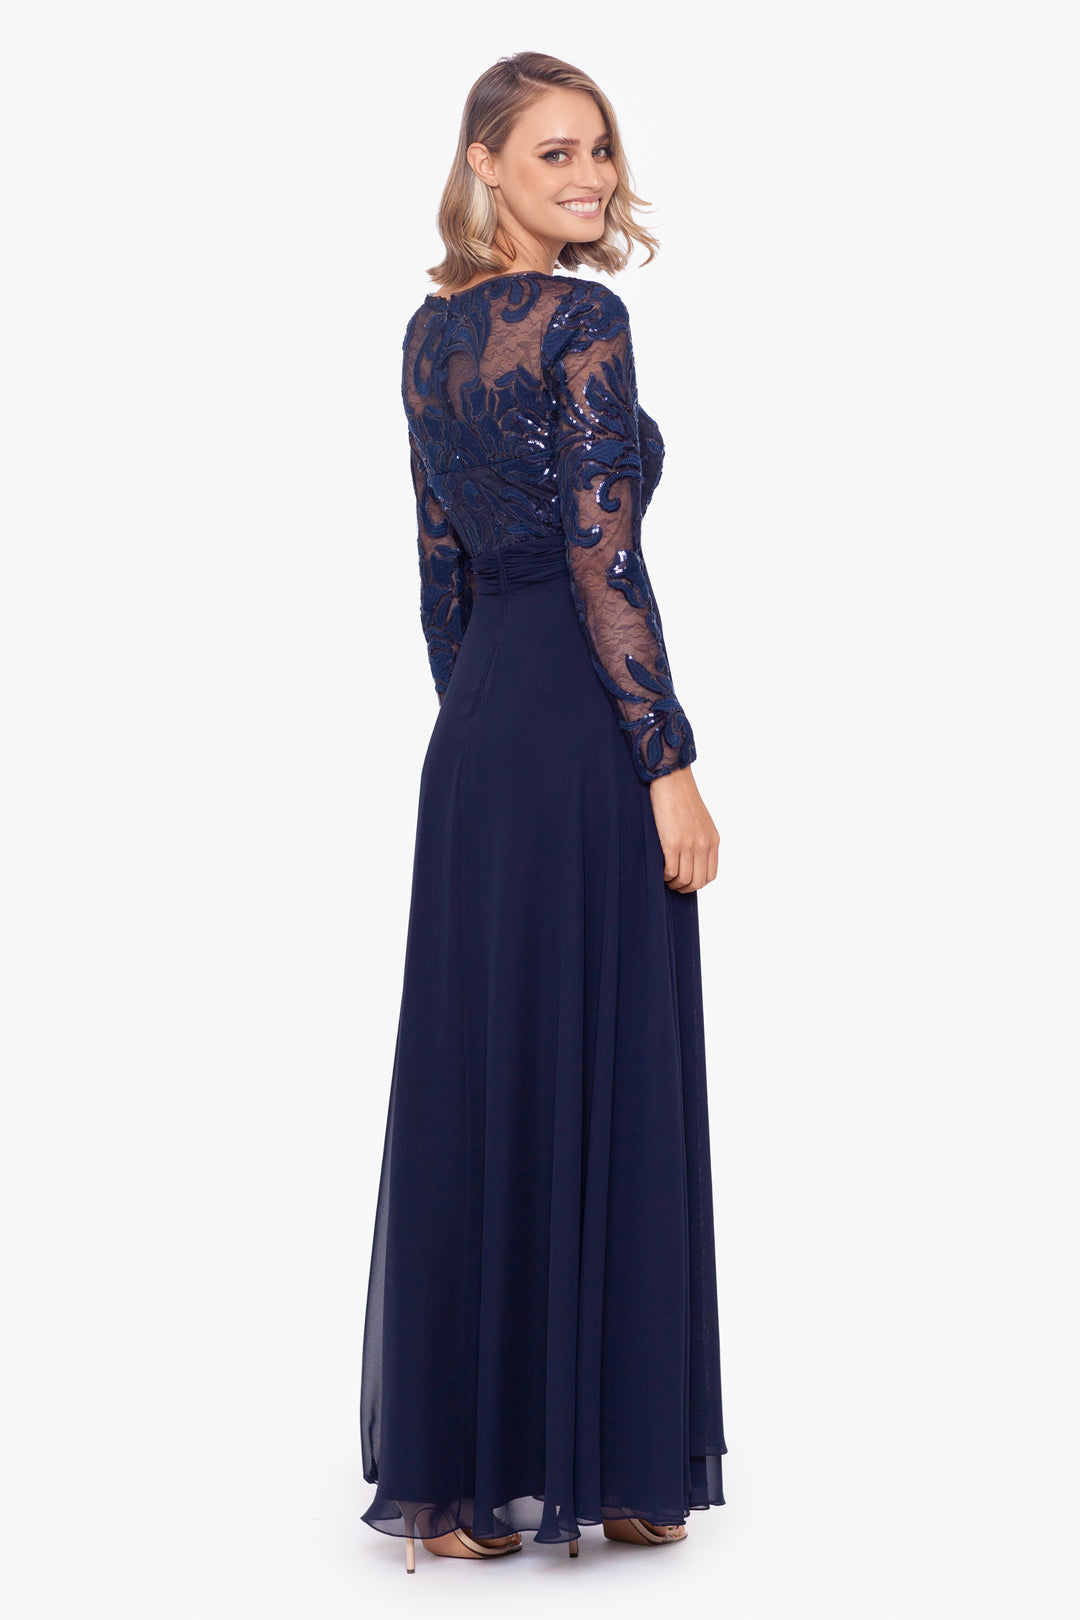 "Remi" Long Sleeve Sequin Top Dress